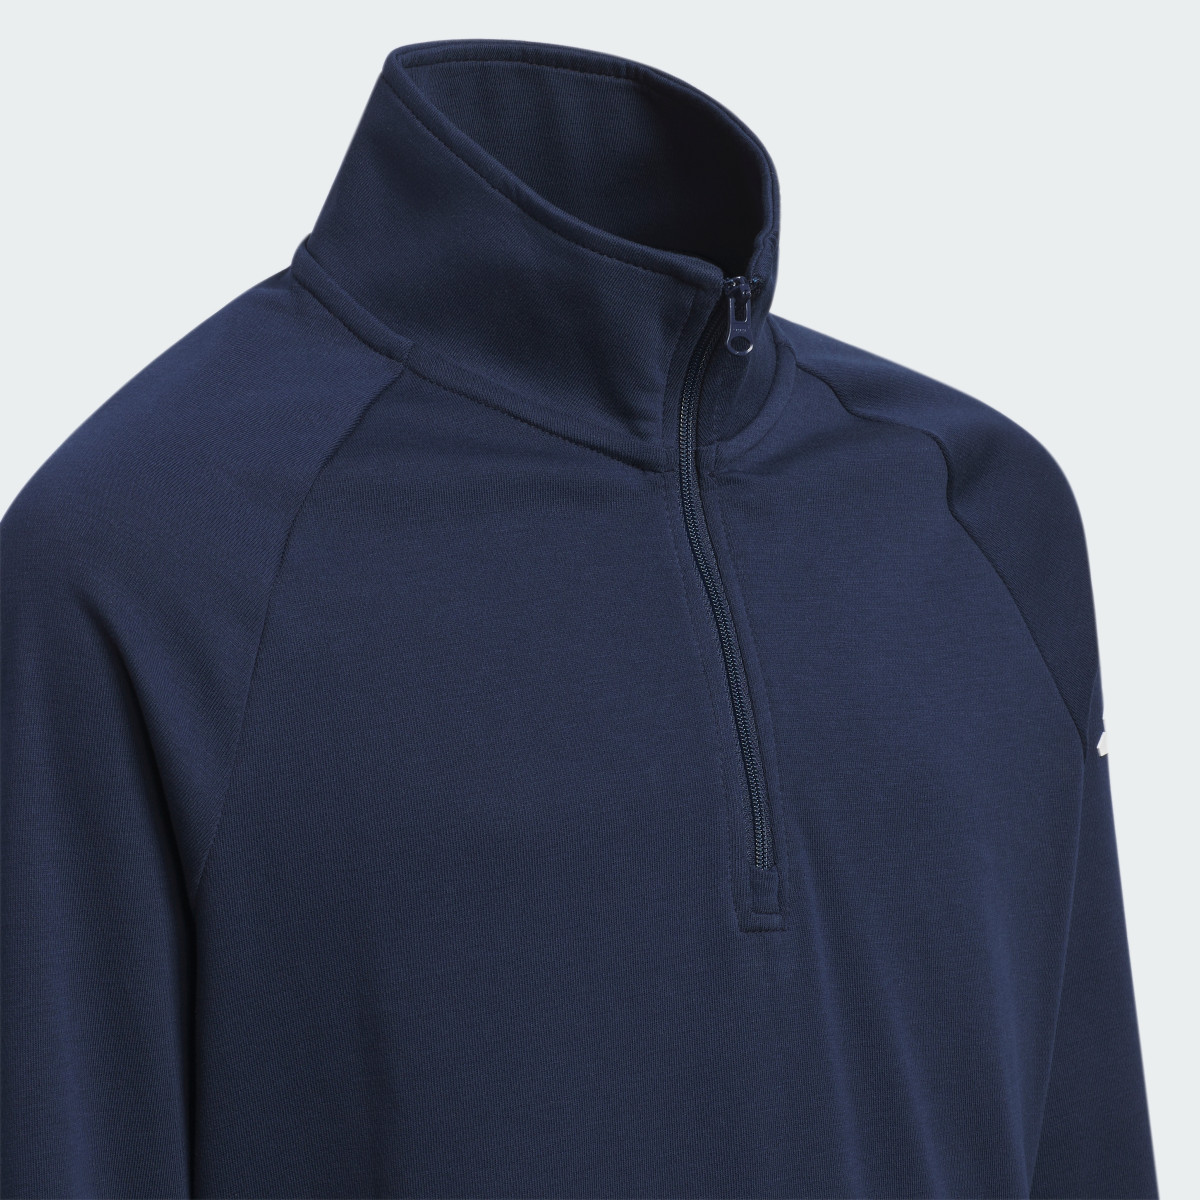 Adidas 1/4-Zip Layer Pullover. 4